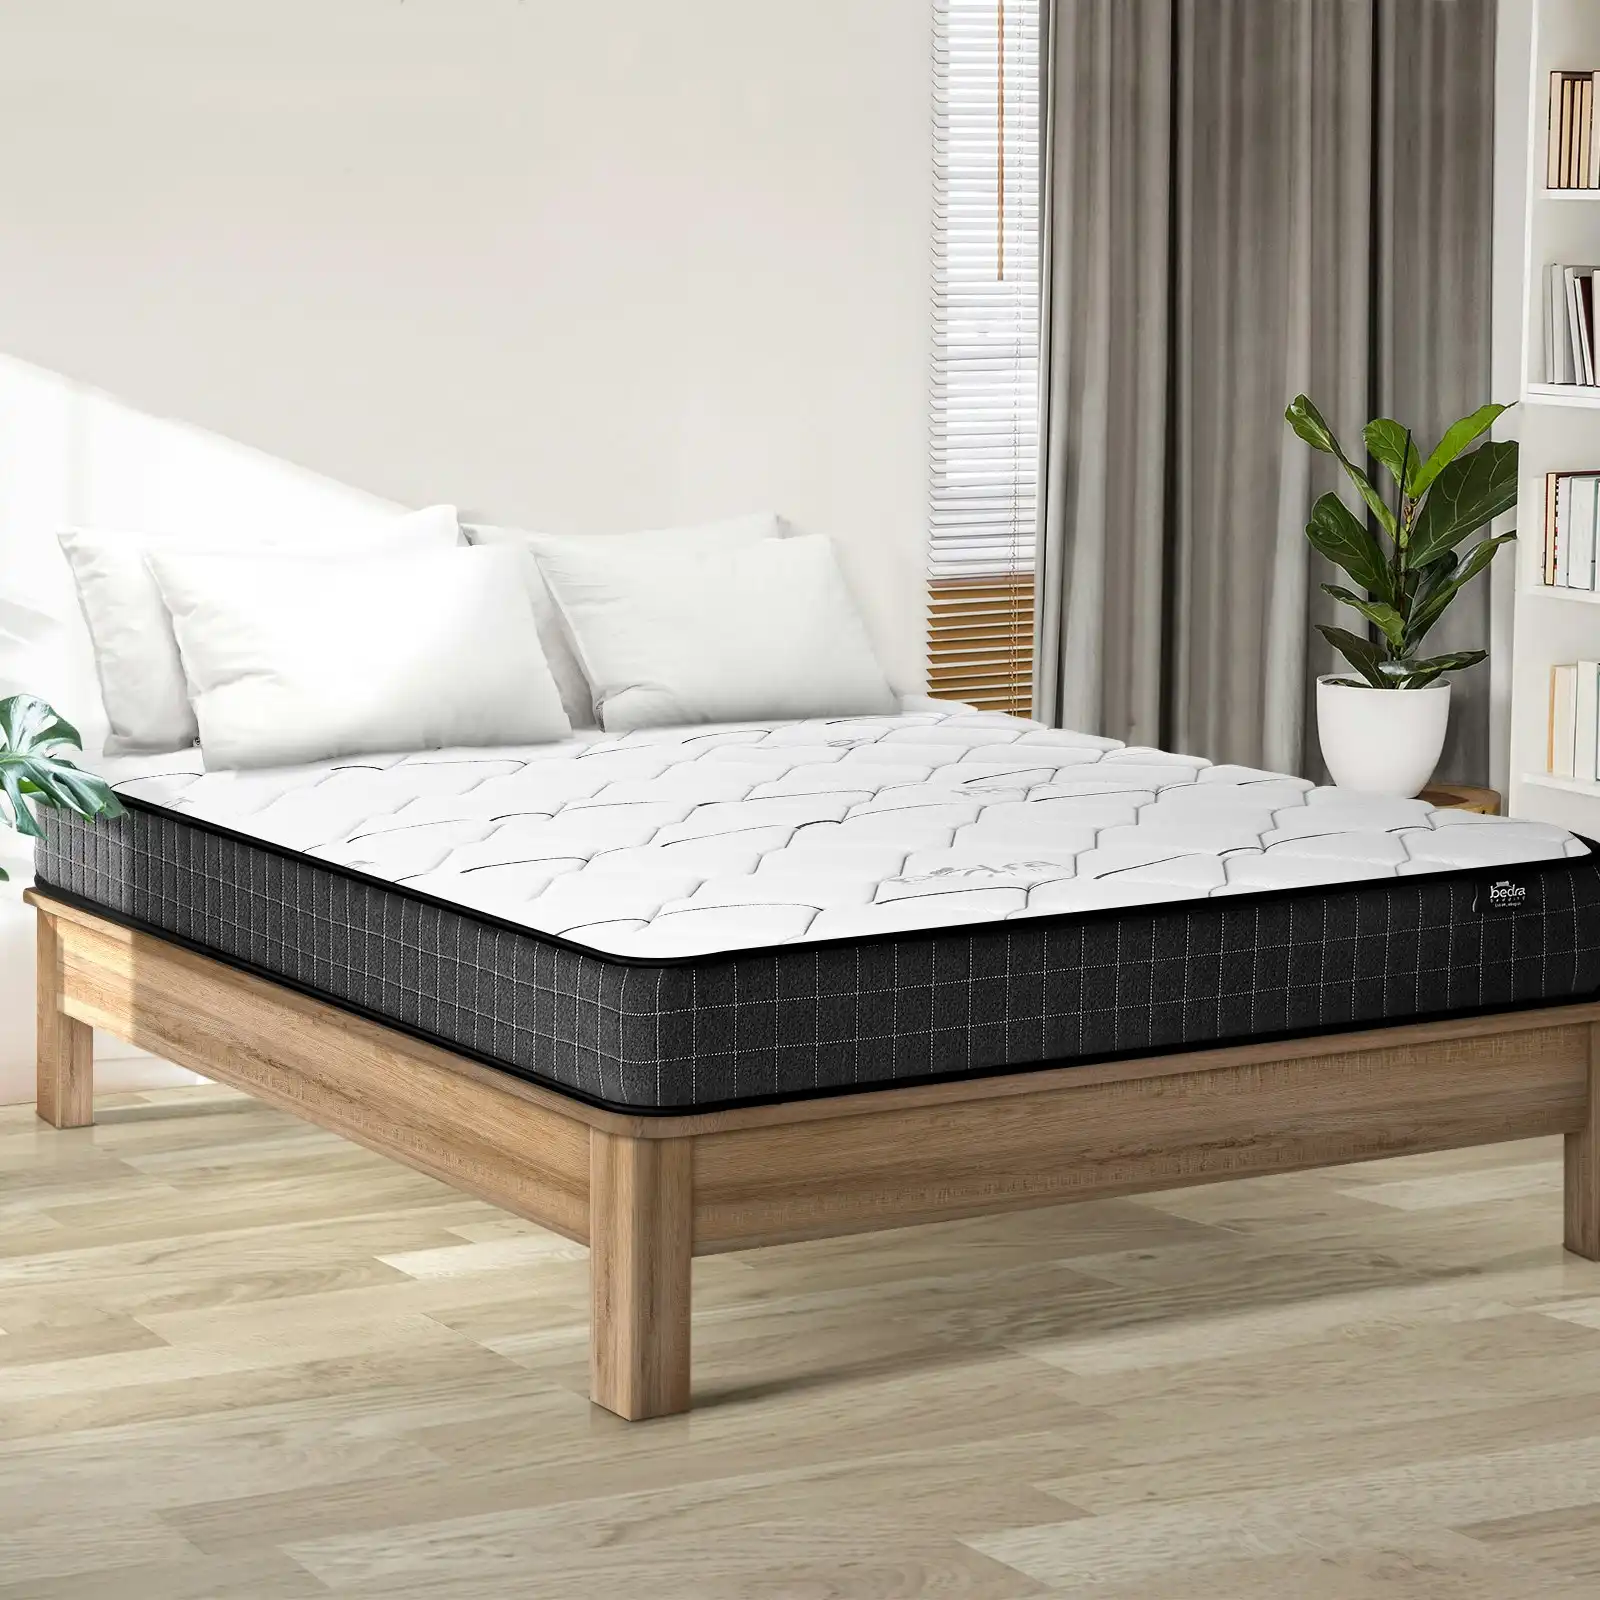 Bedra Double Mattress Bed Luxury Medium Firm Foam Bonnell Spring 16cm